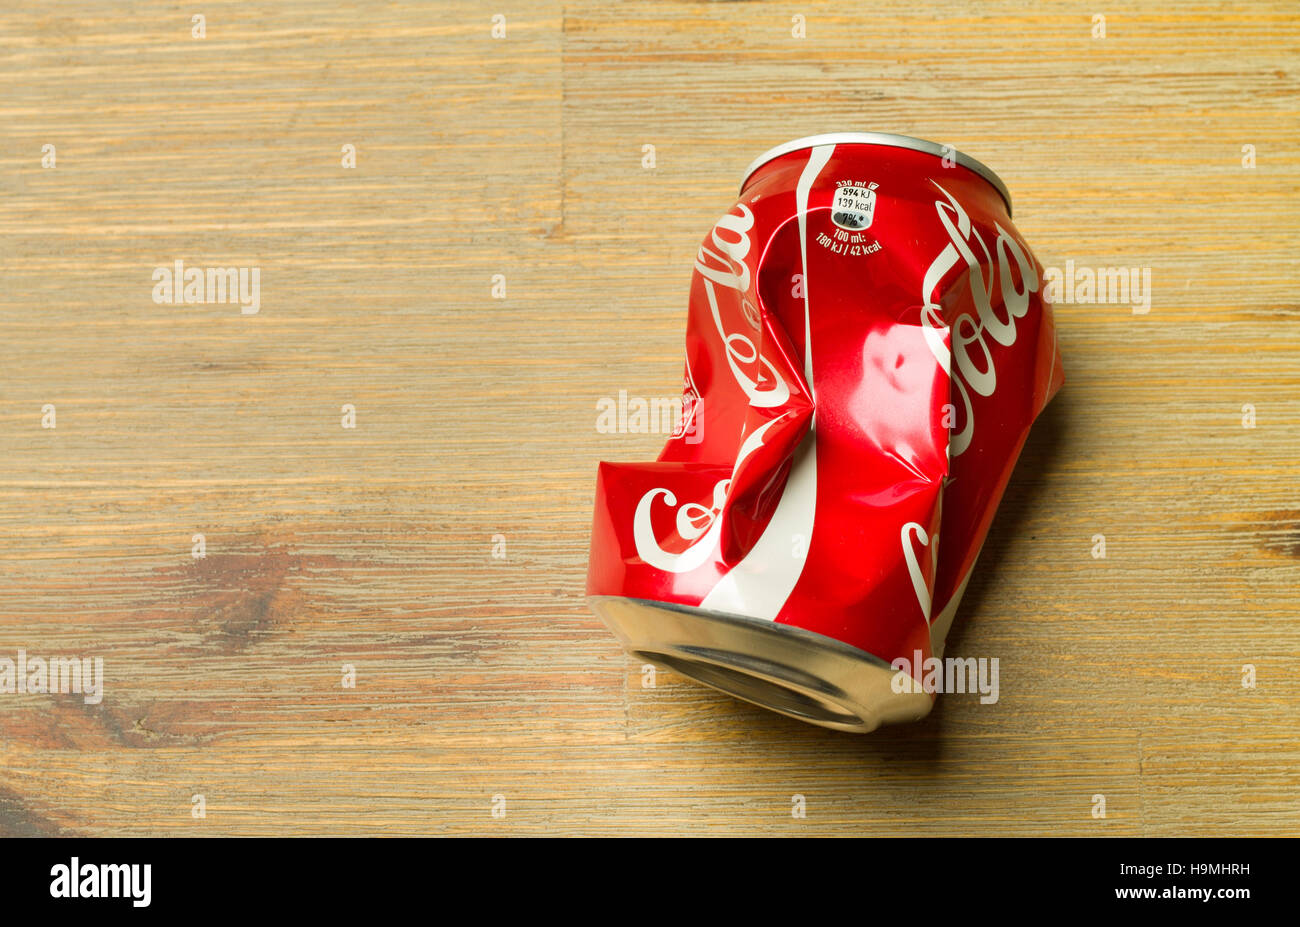 TALLINN, Estland HARJUMAA - 6. November 2016: Crushed Klassiker kann Coca-Cola auf dem Schreibtisch. Stockfoto